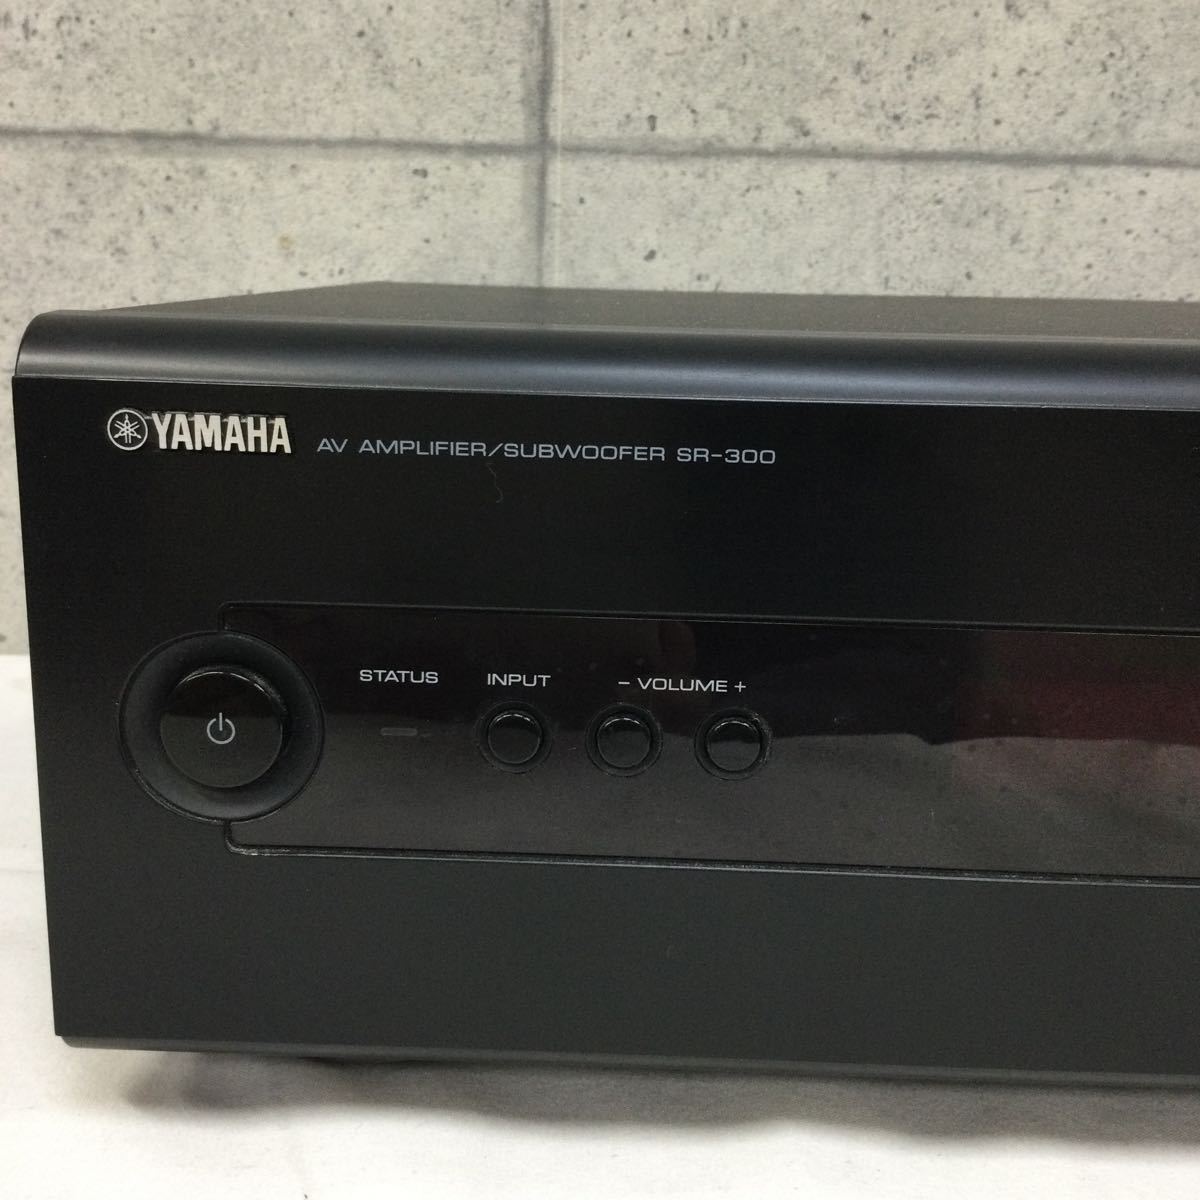 ◎【YAMAHA/ヤマハ】SR-300 NS-BR300 ホームシアターパッケージ AV アンプ・サブウーファー + スピーカー 通電確認済み オーディオ機器_画像5